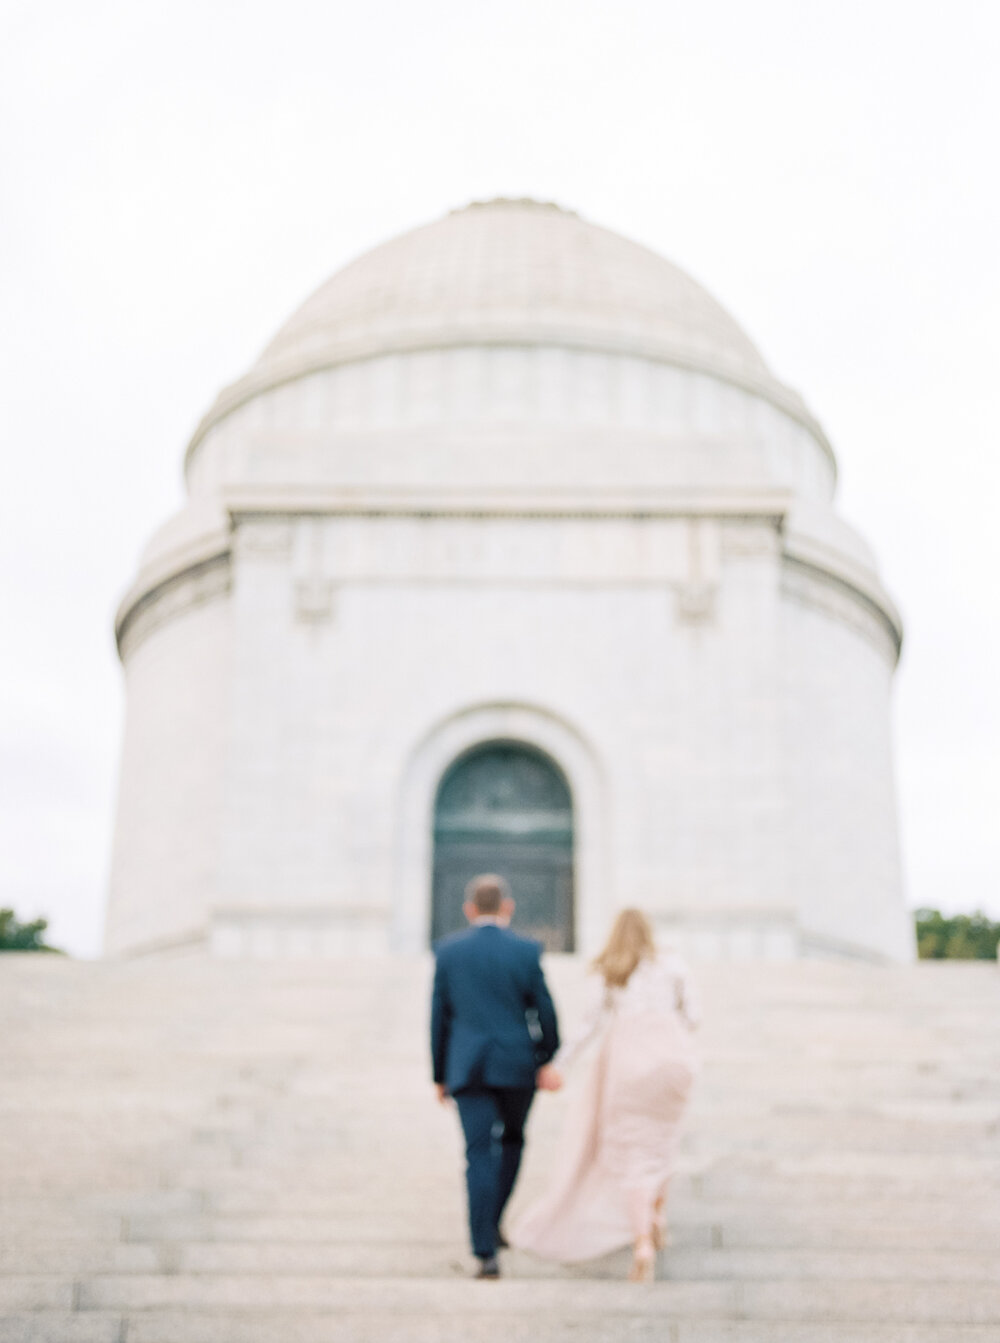 Classy Engagement Photographs - McKinley Monument Canton Ohio - Matt Erickson Photography